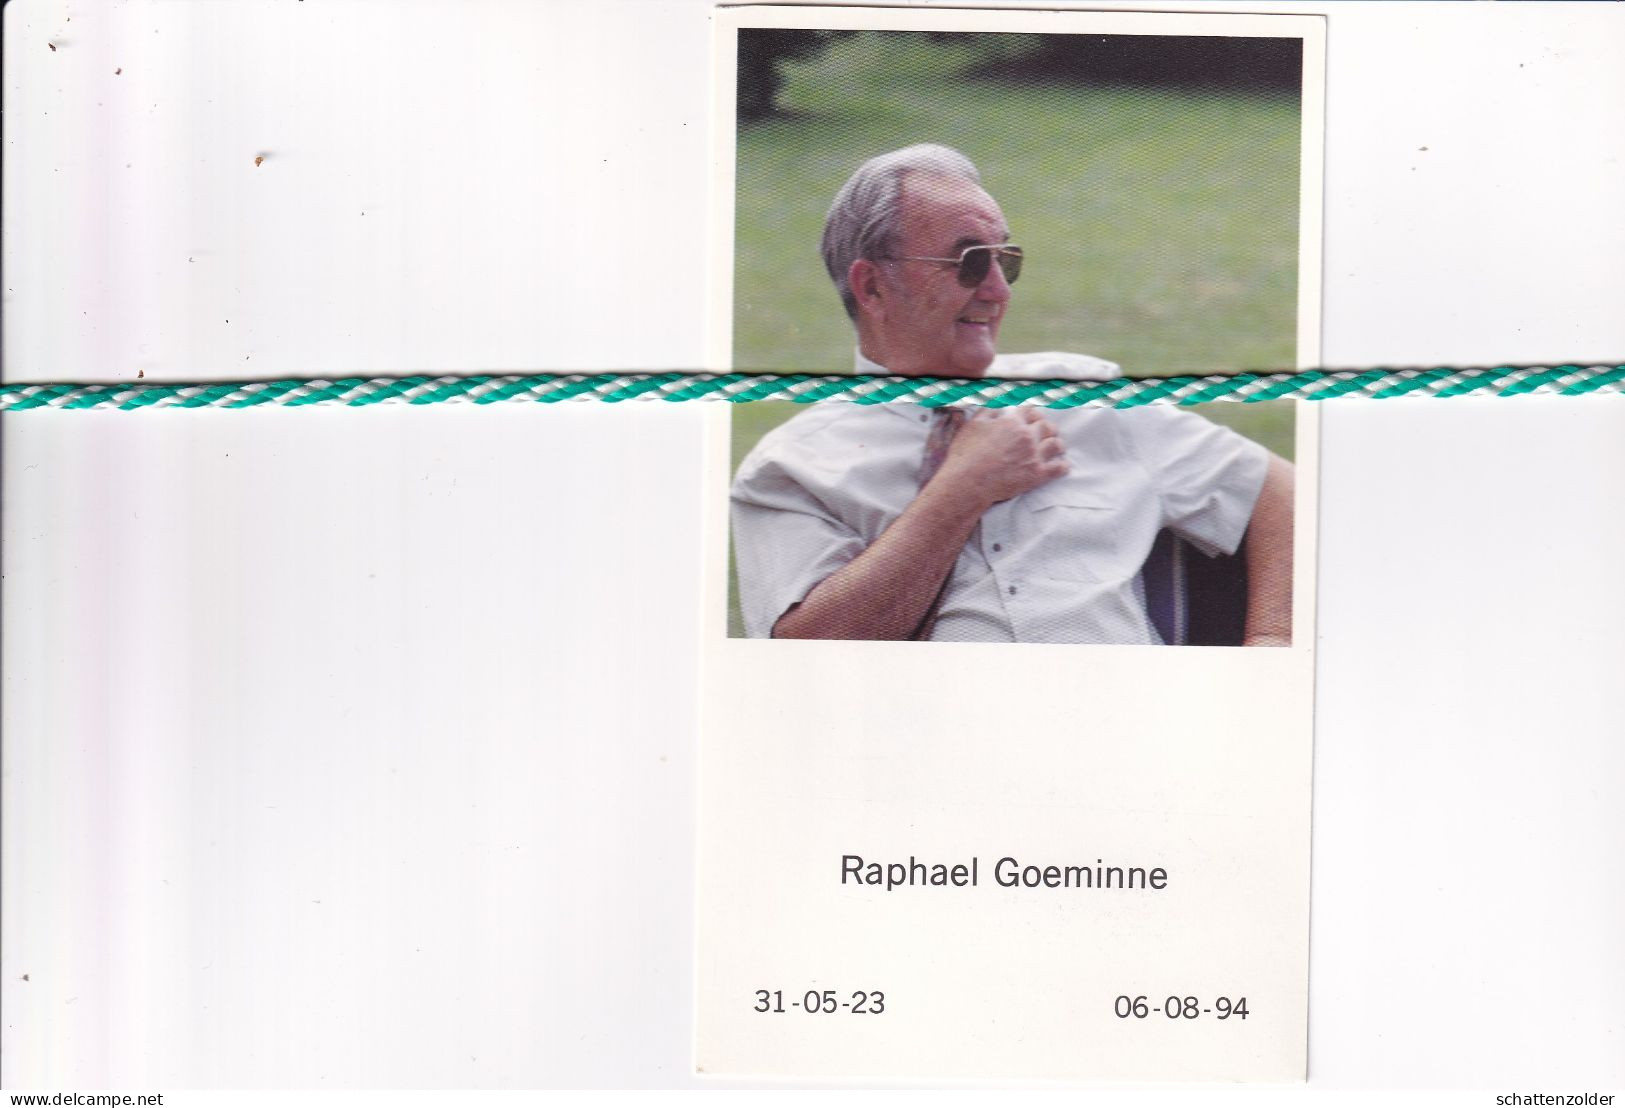 Raphael Goeminne, 1923, 1994. Foto - Todesanzeige